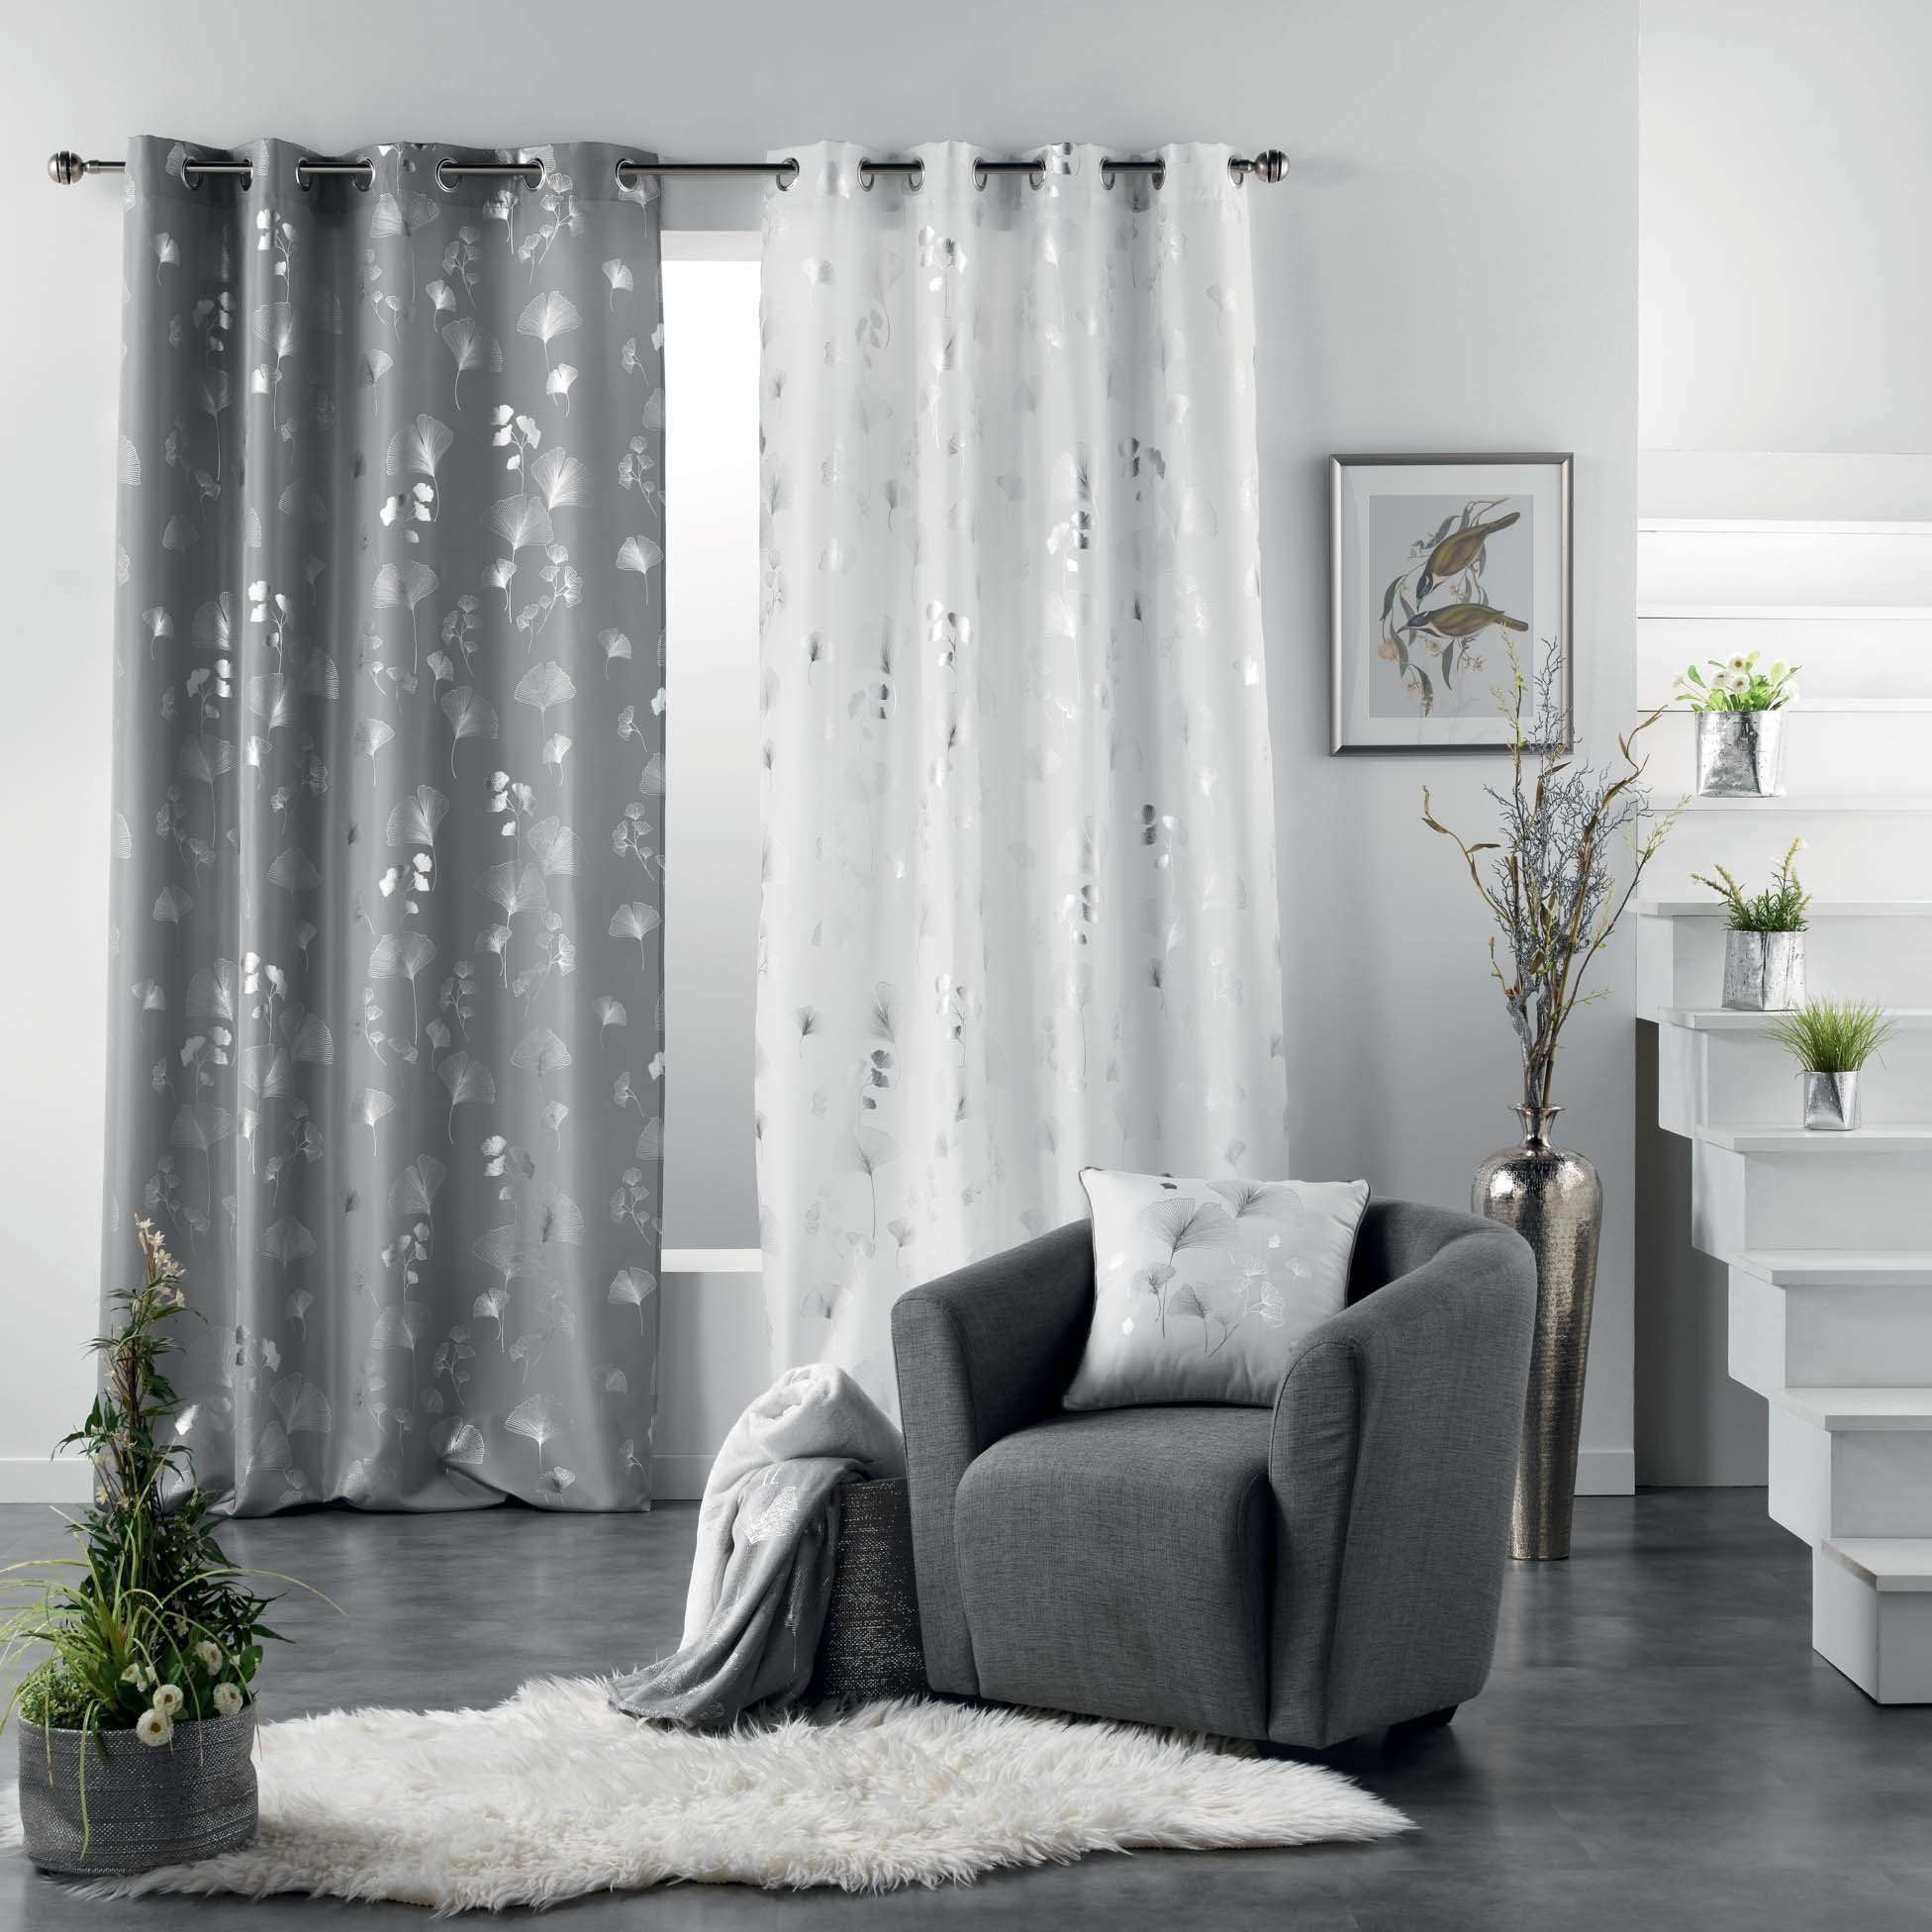 Blattdruck Vorhang, grau silber Vorhang Ösenschal dynamic24, halbtransparent, 140x260cm Ösen,